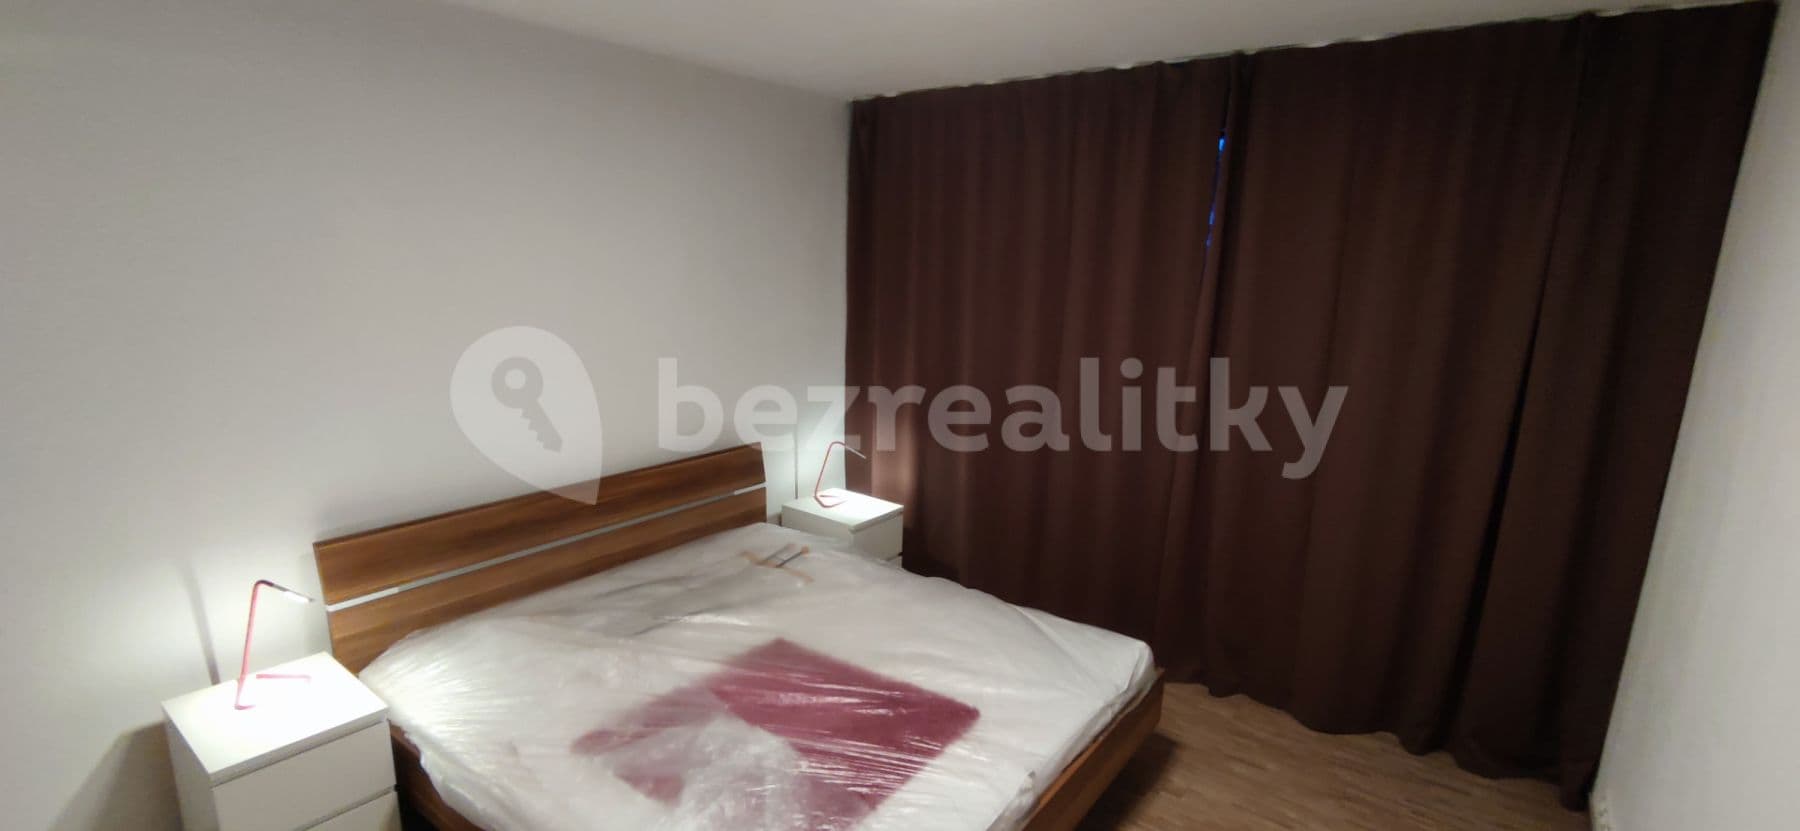 3 bedroom flat to rent, 84 m², Okružní, Blansko, Jihomoravský Region